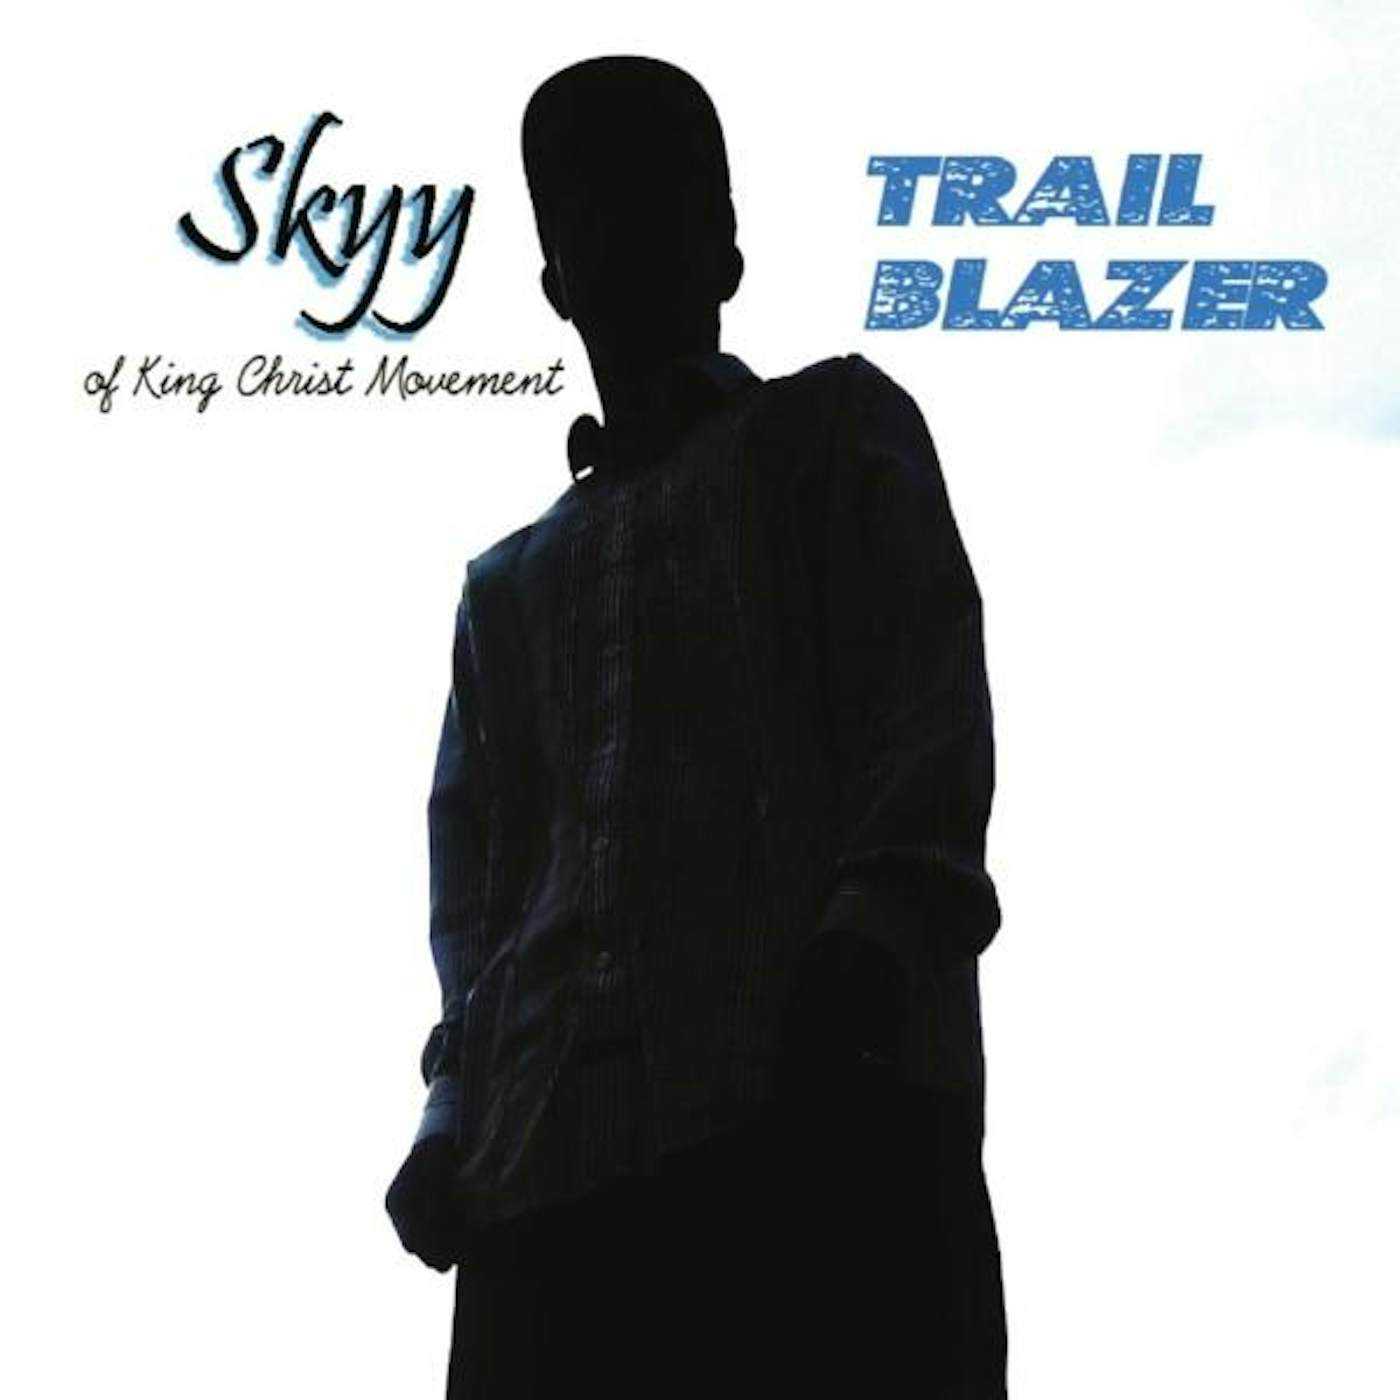 Skyy TRAIL BLAZER CD